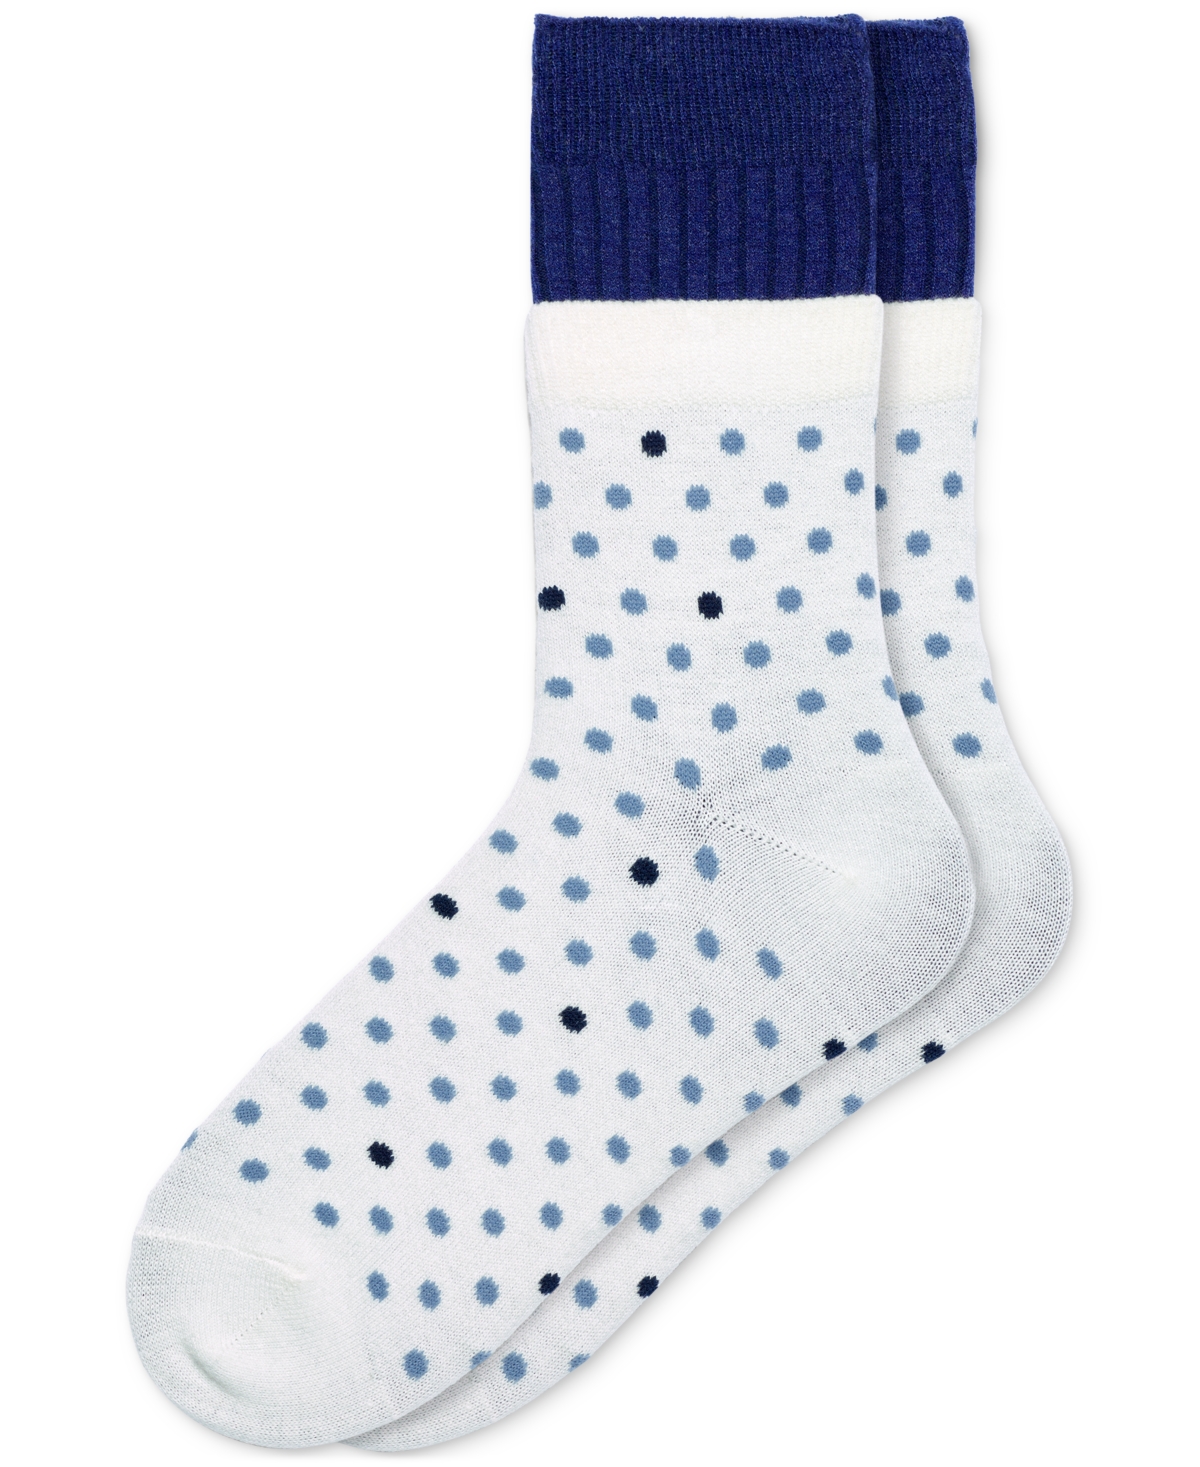 Women's 2-Pk. Layered Look Socks - Dots Pack